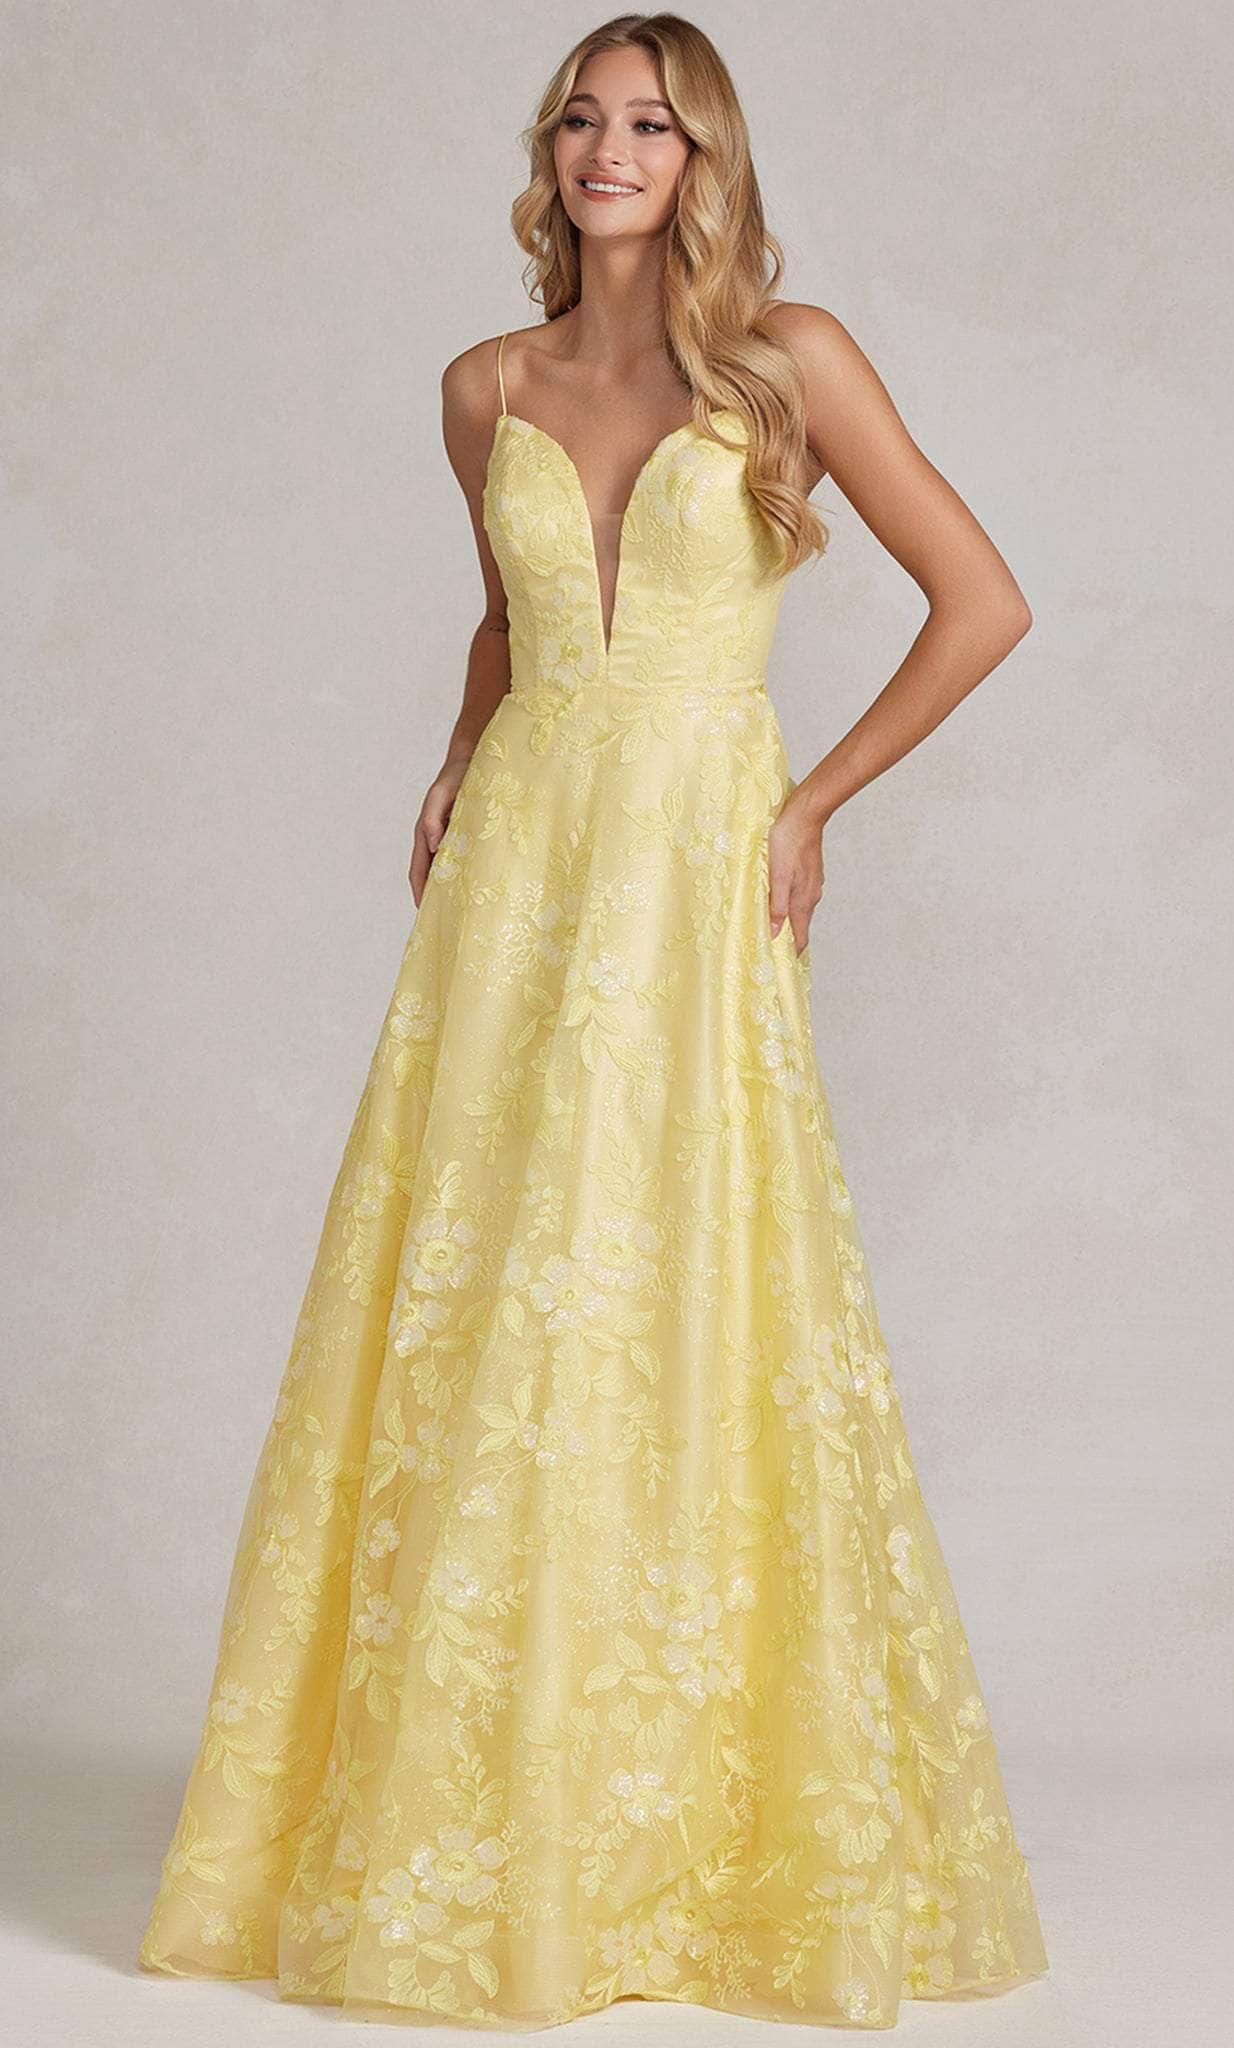 Image of Nox Anabel E1175 - Sleeveless A-Line Prom Dress